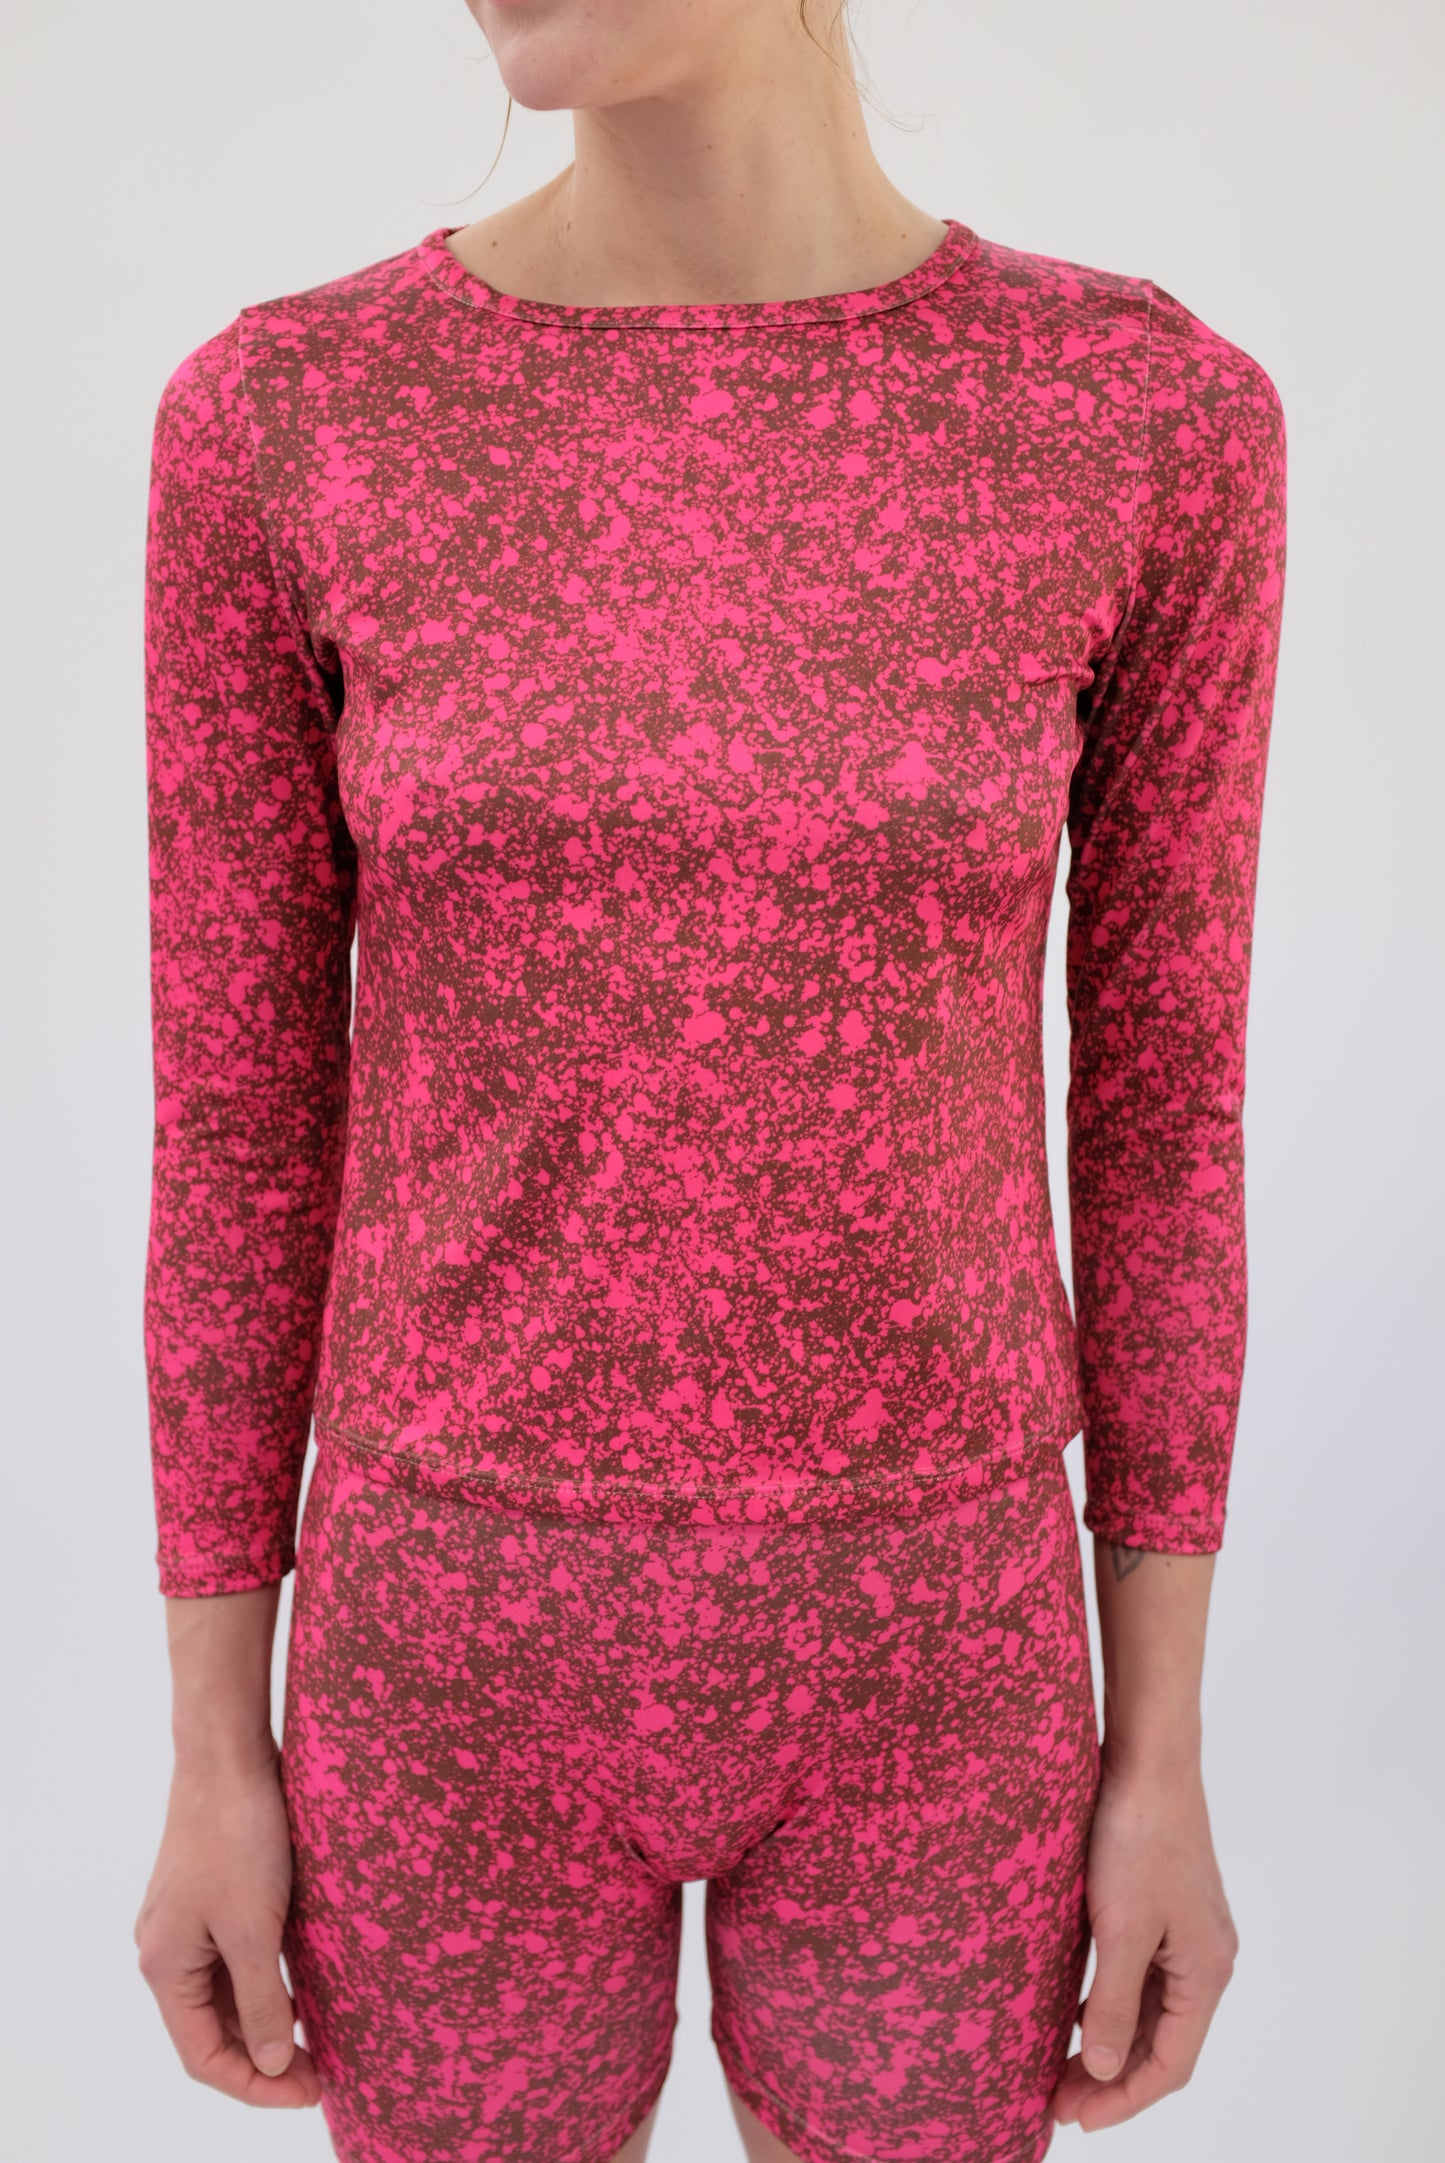 Beklina Lycra T-Shirt Splatter Raspberry